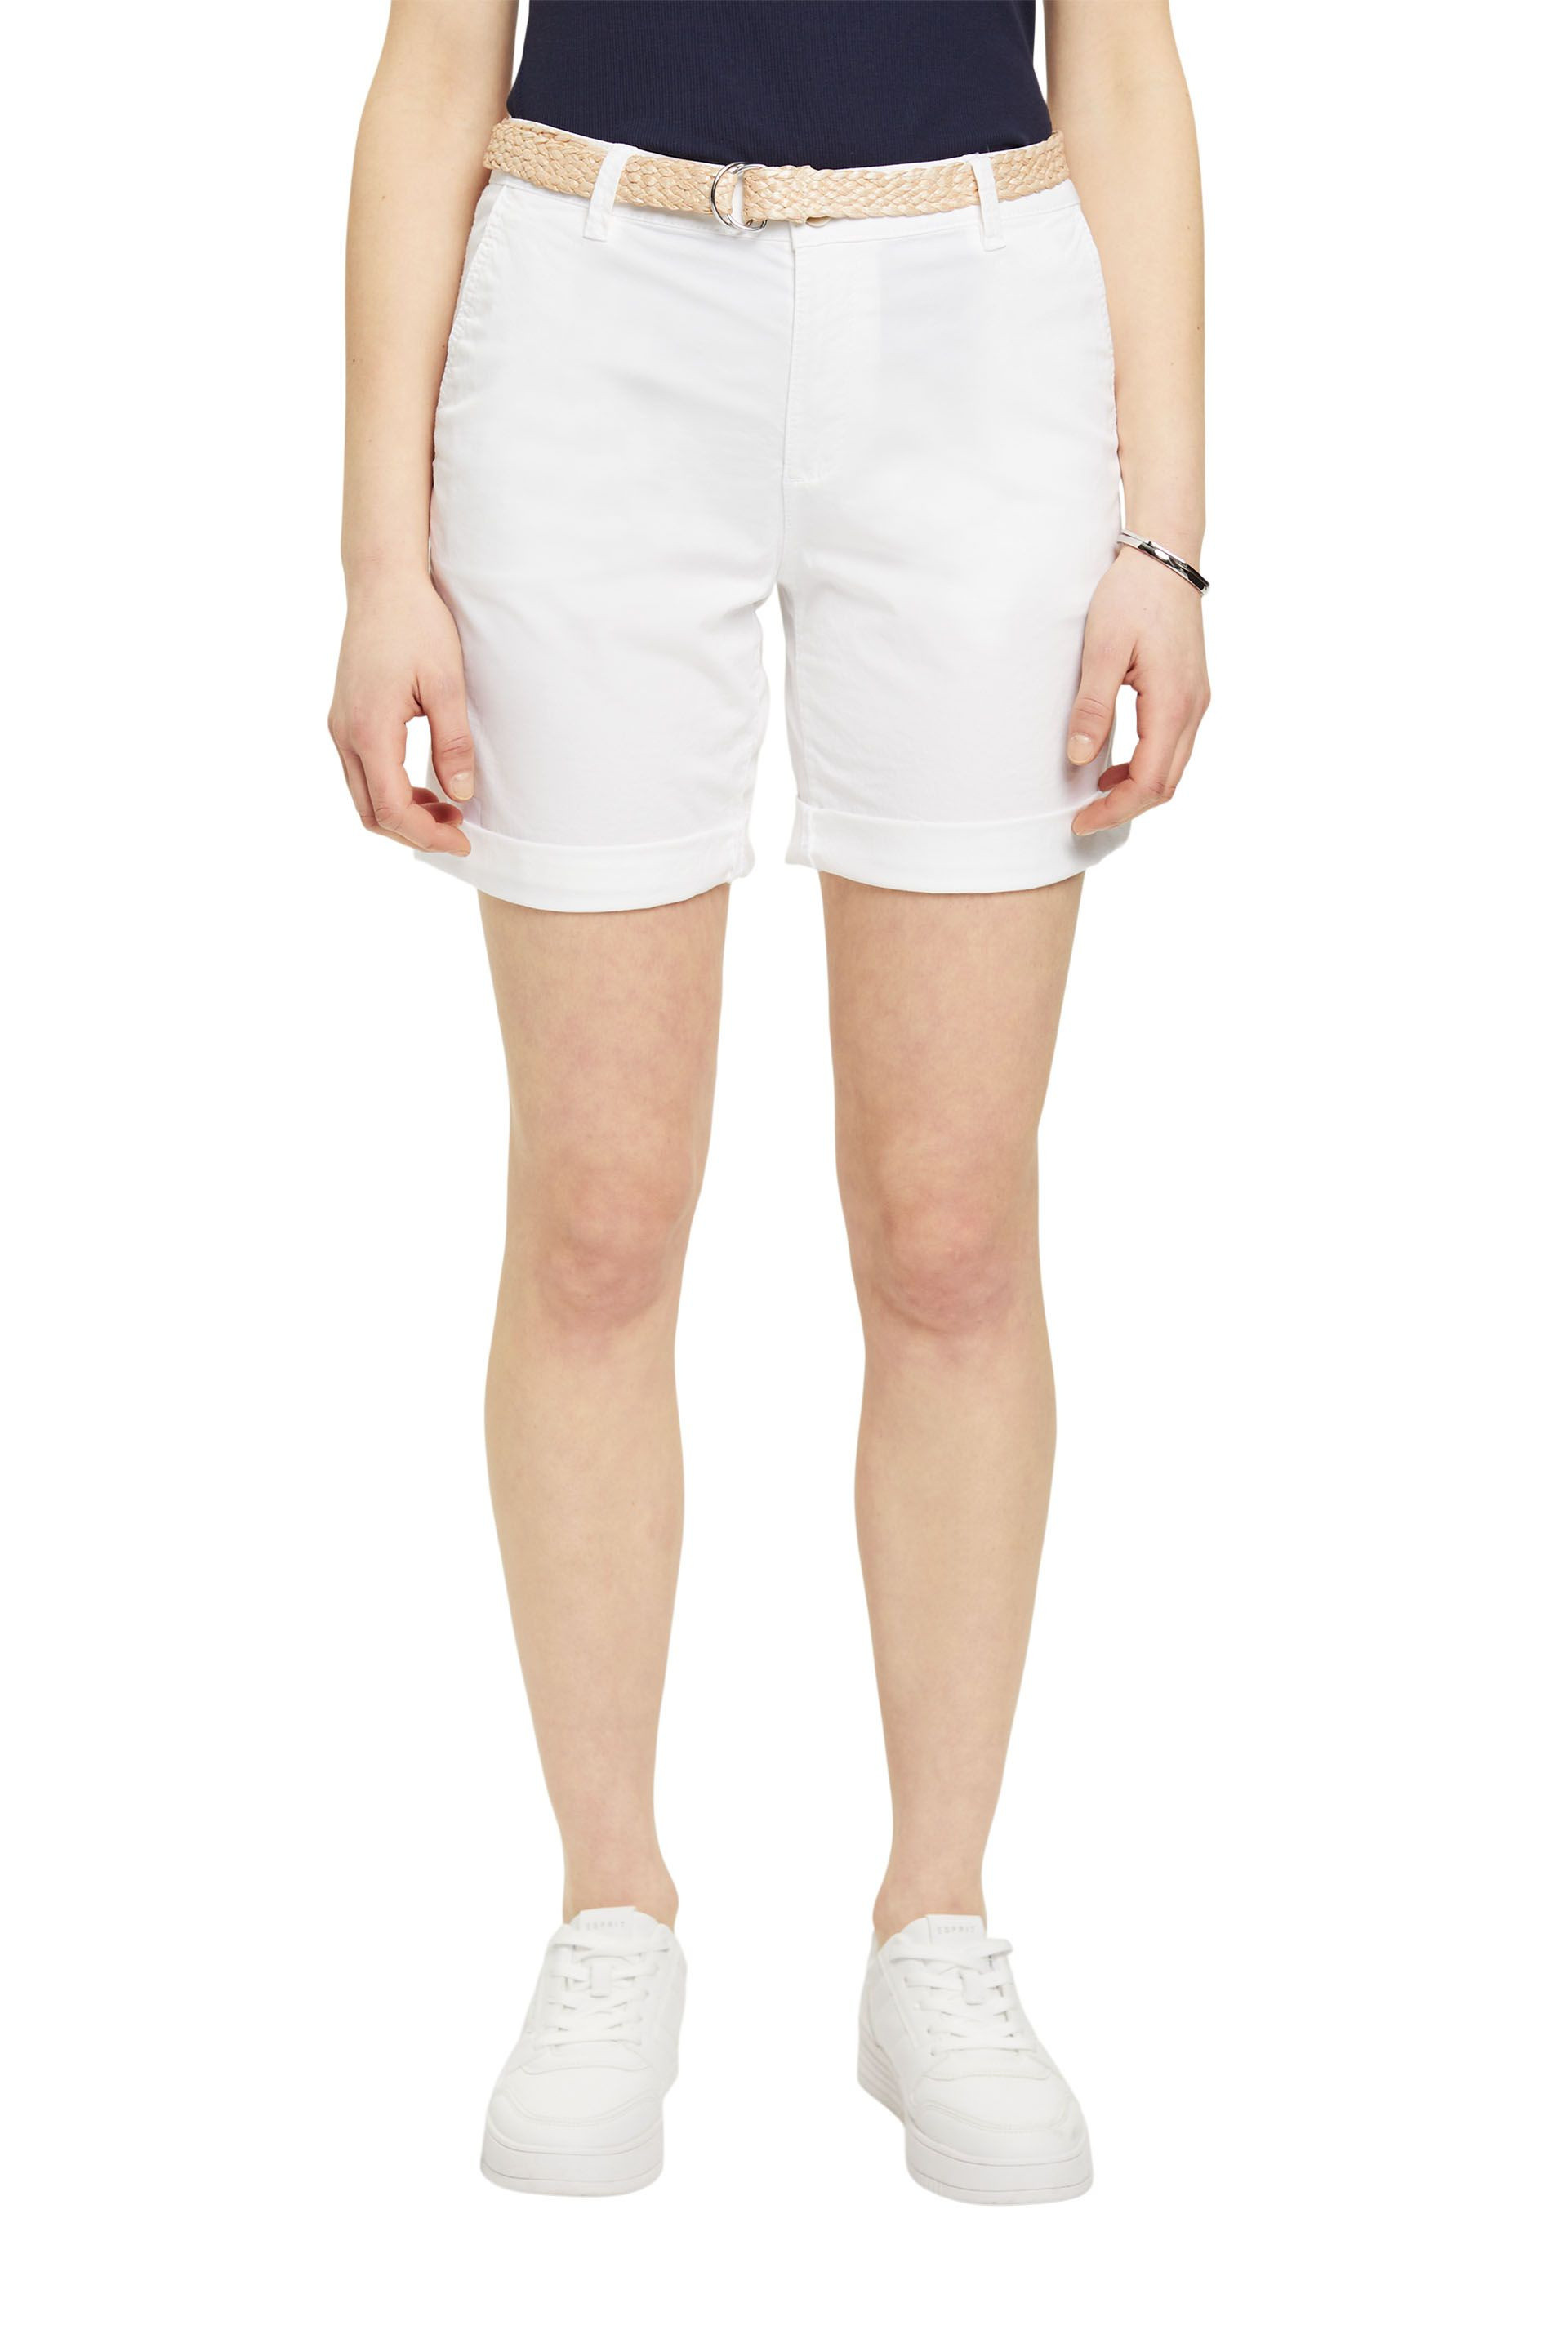 Esprit - Shorts with braided raffia belt, White, large image number 2